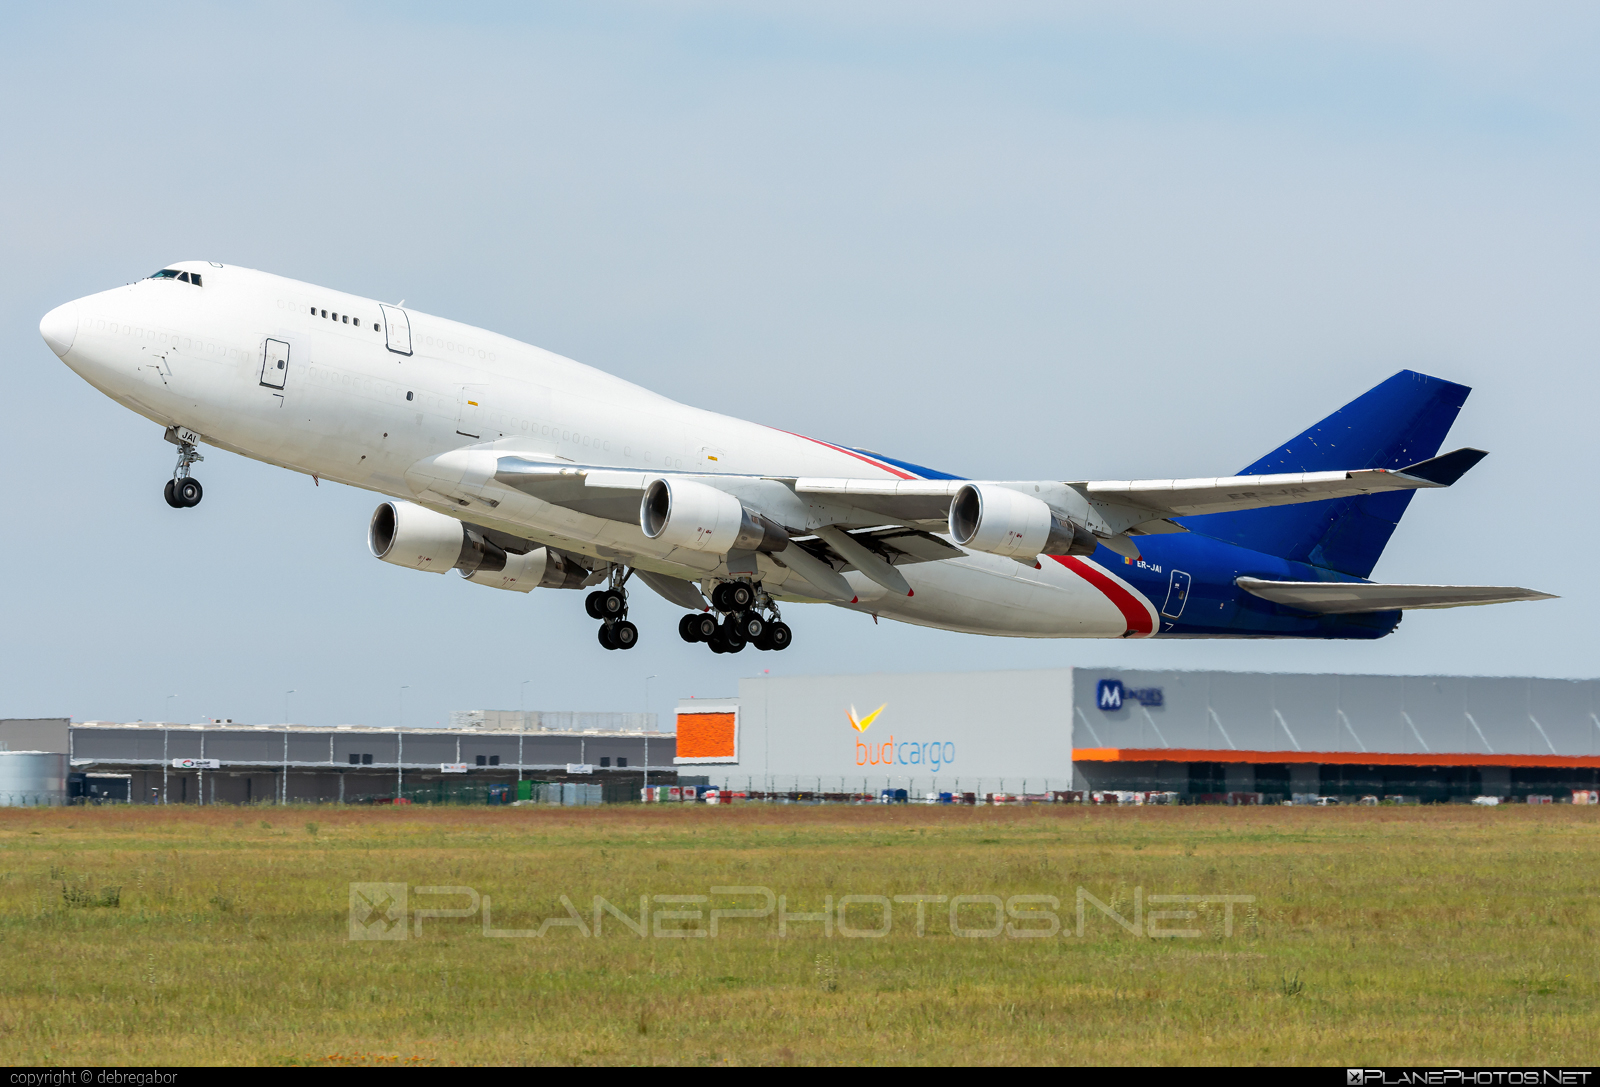 Boeing 747-400BDSF - ER-JAI operated by Aerotrans Cargo #aerotranscargo #b747 #b747bdsf #b747freighter #bedekspecialfreighter #boeing #boeing747 #jumbo